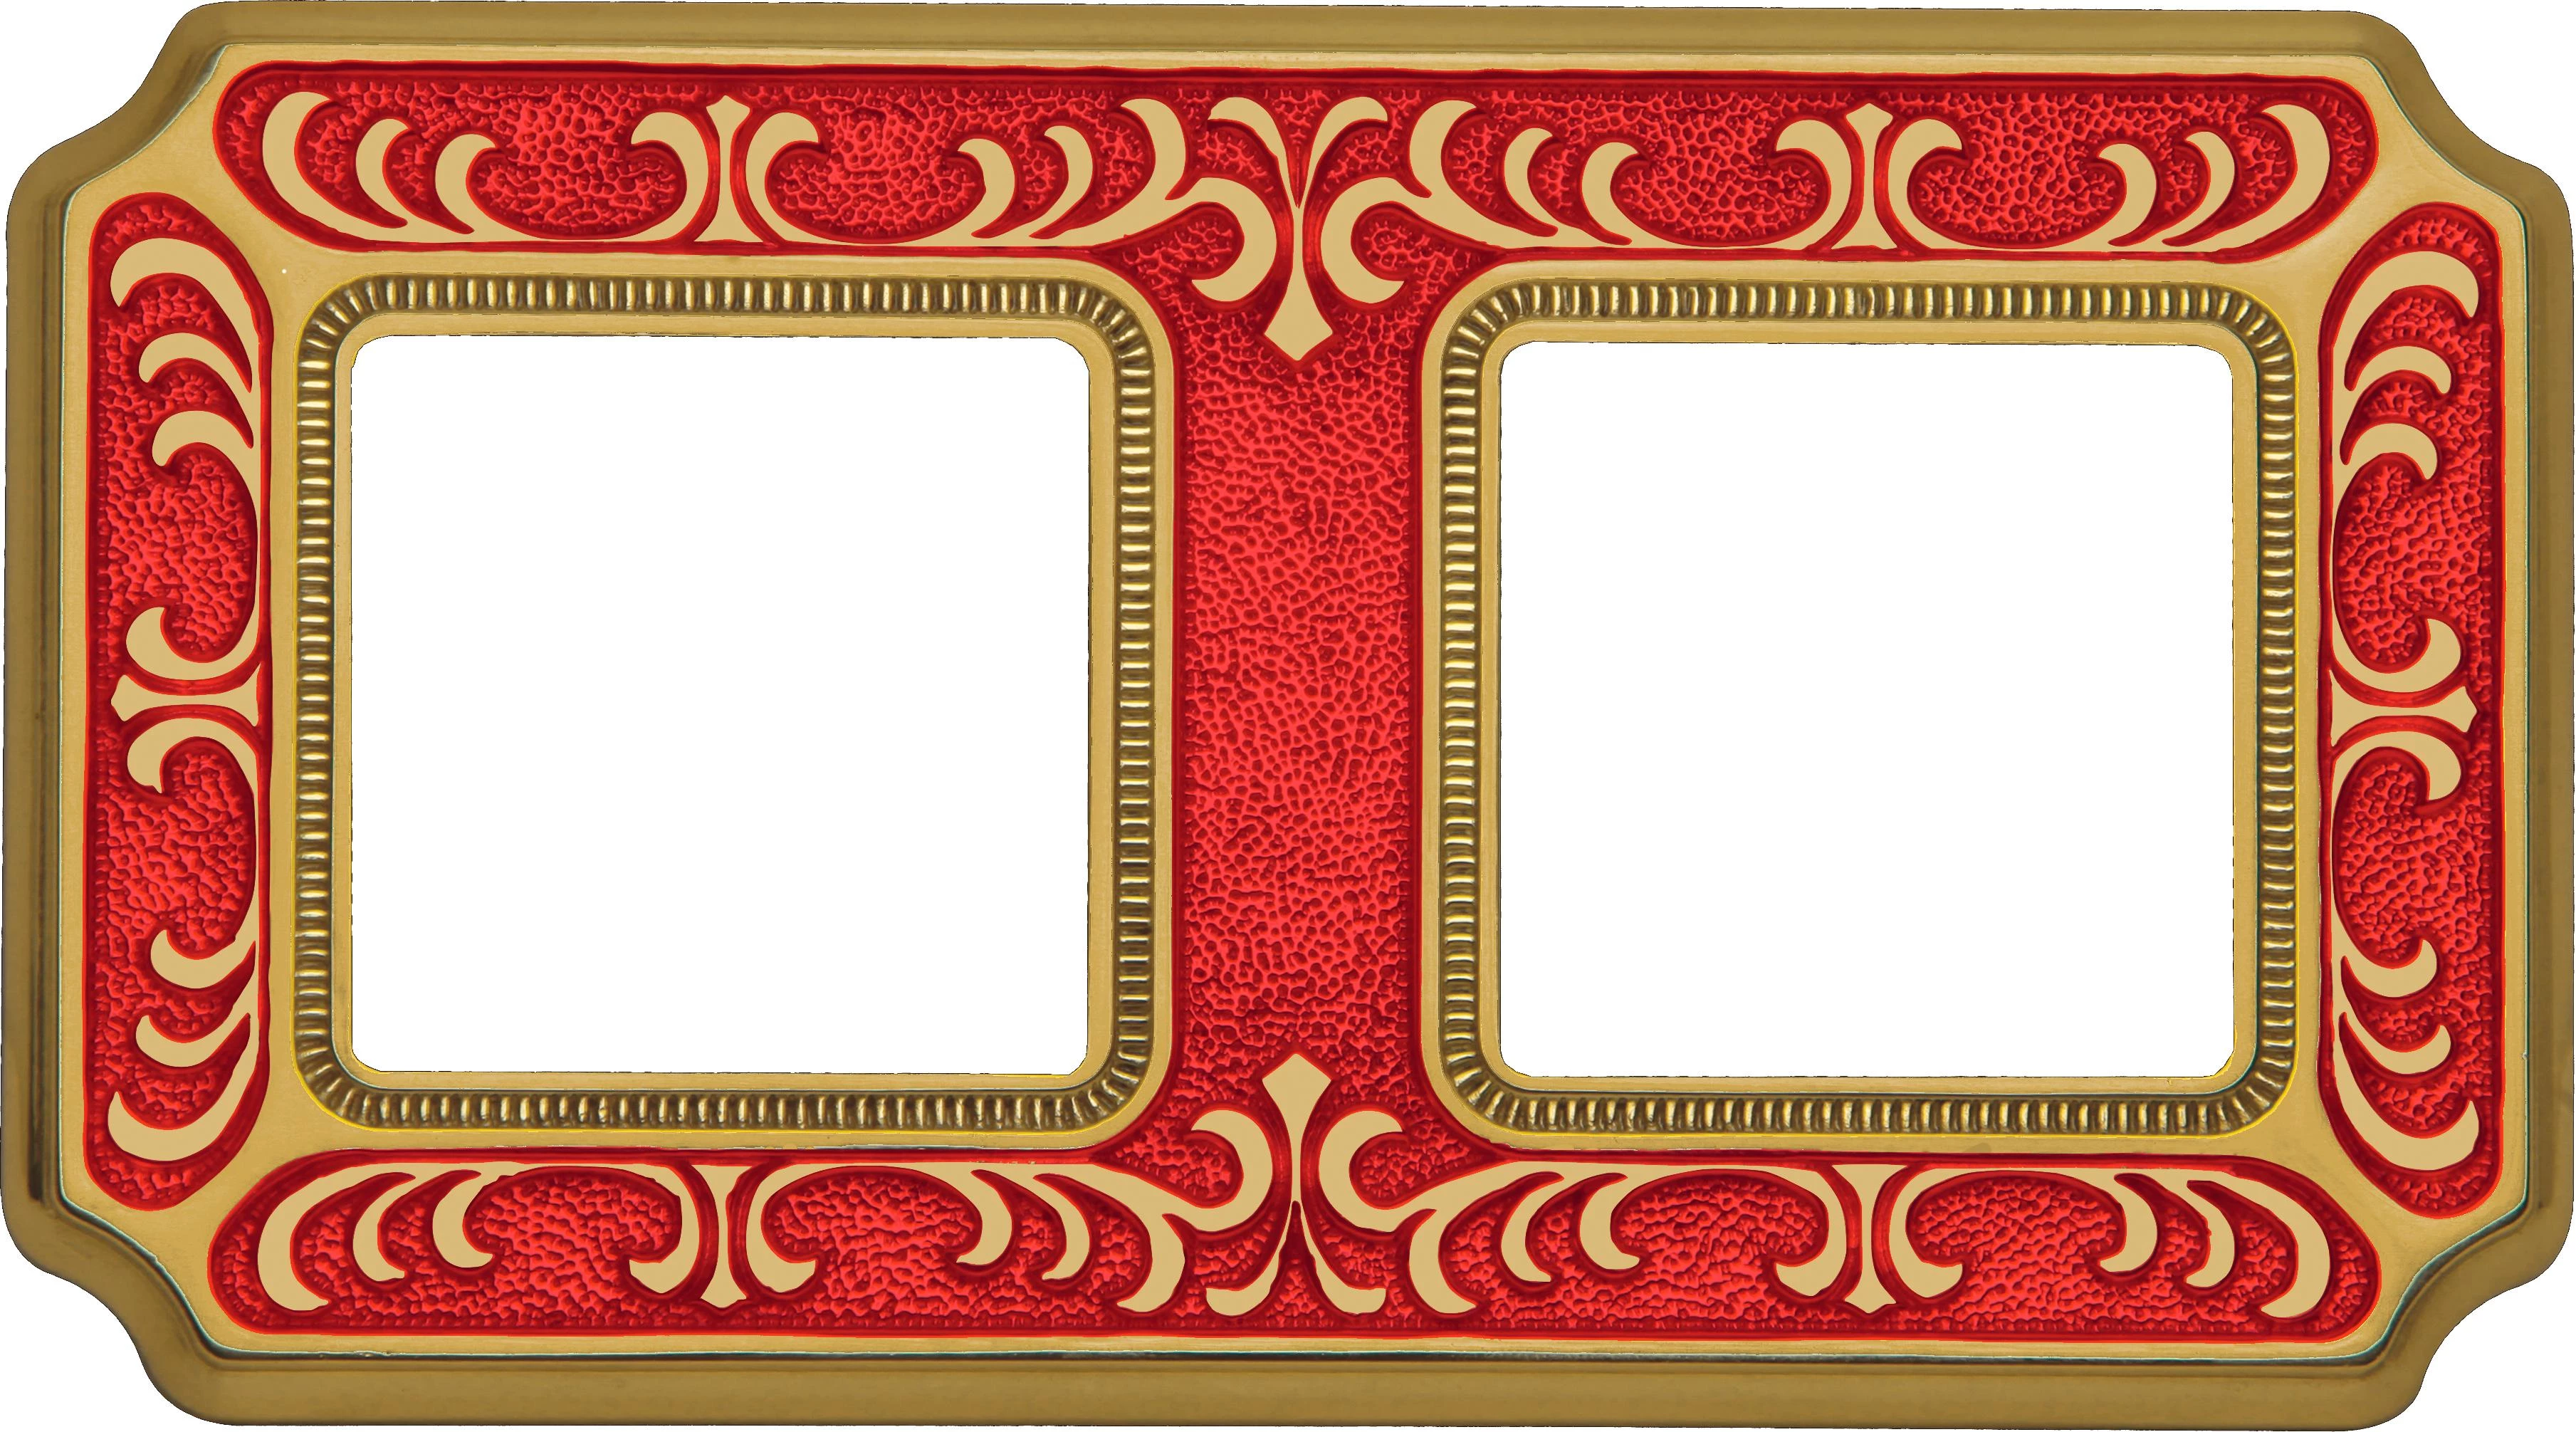  артикул FD01352ROEN название Рамка 2-ая (двойная), цвет Рубиново-красный, Siena, Fede